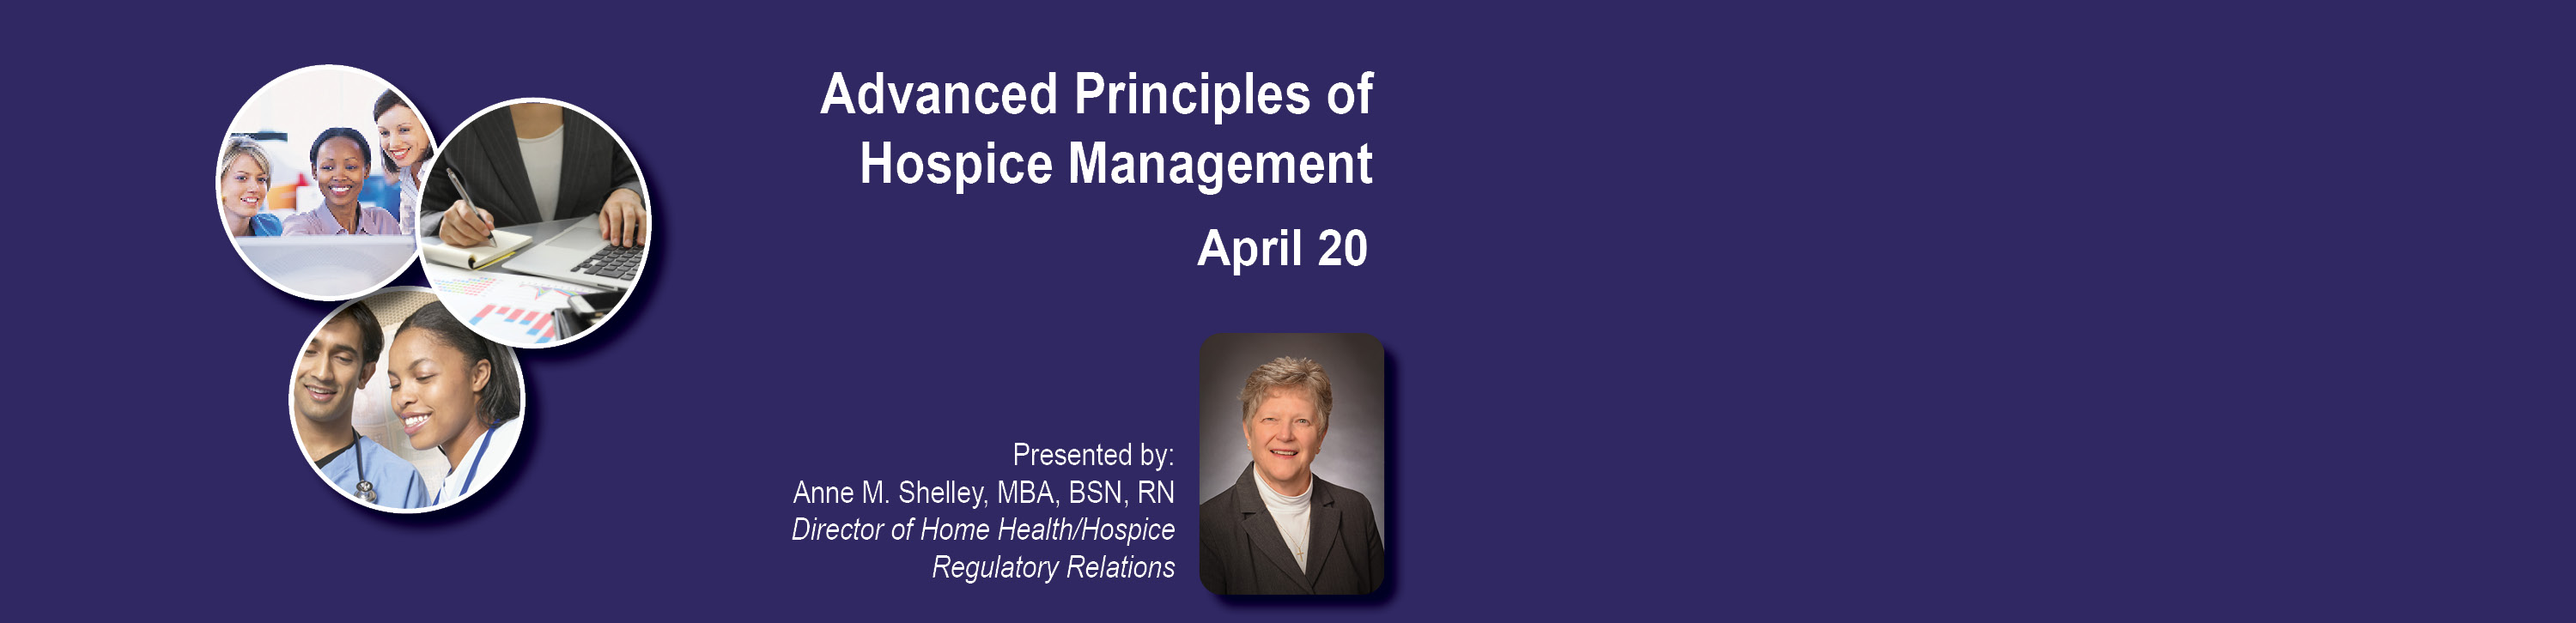 Advanced Principles of Hospice Management